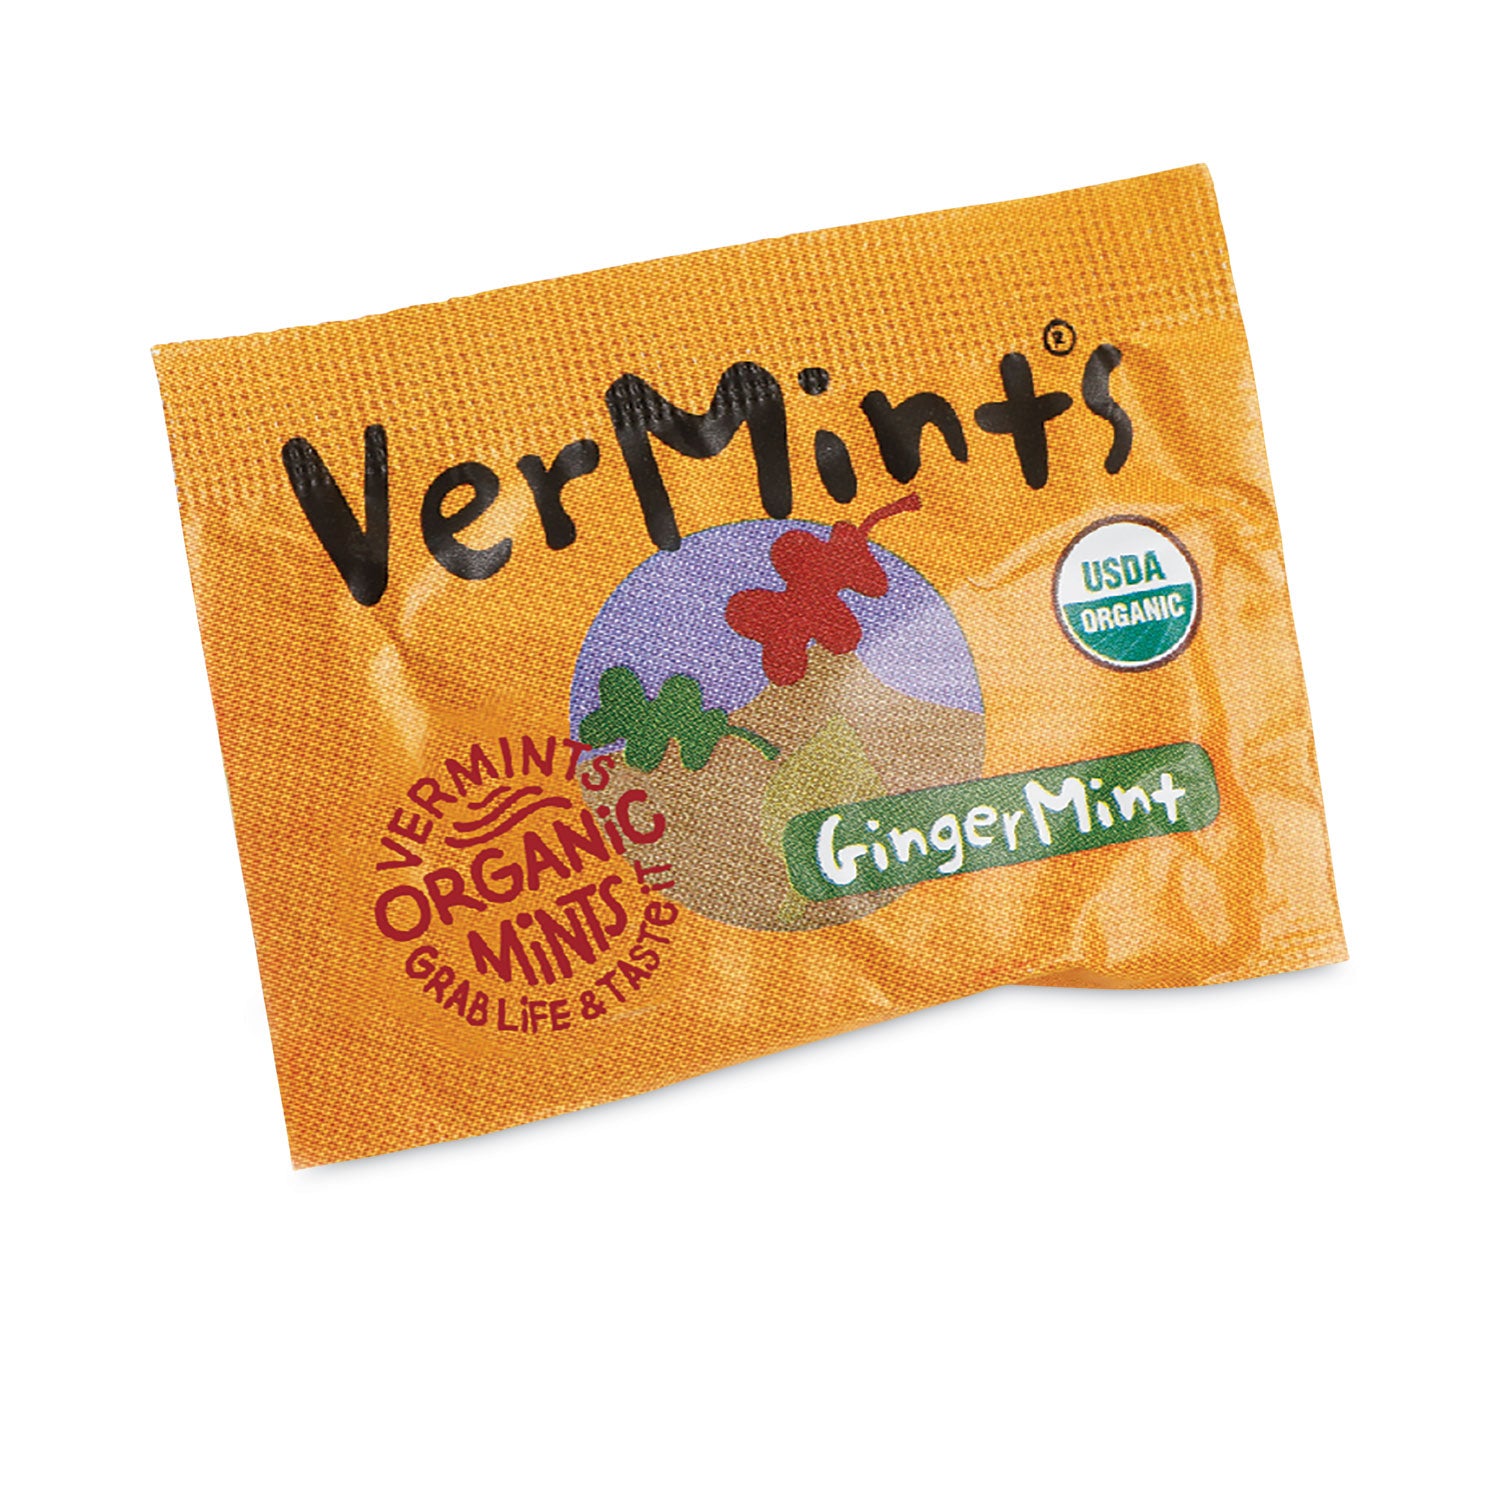 vermints-organic-mints-pastilles-gingermint-2-mints-07-oz-individually-wrapped-100-box_vemvnt00994 - 1